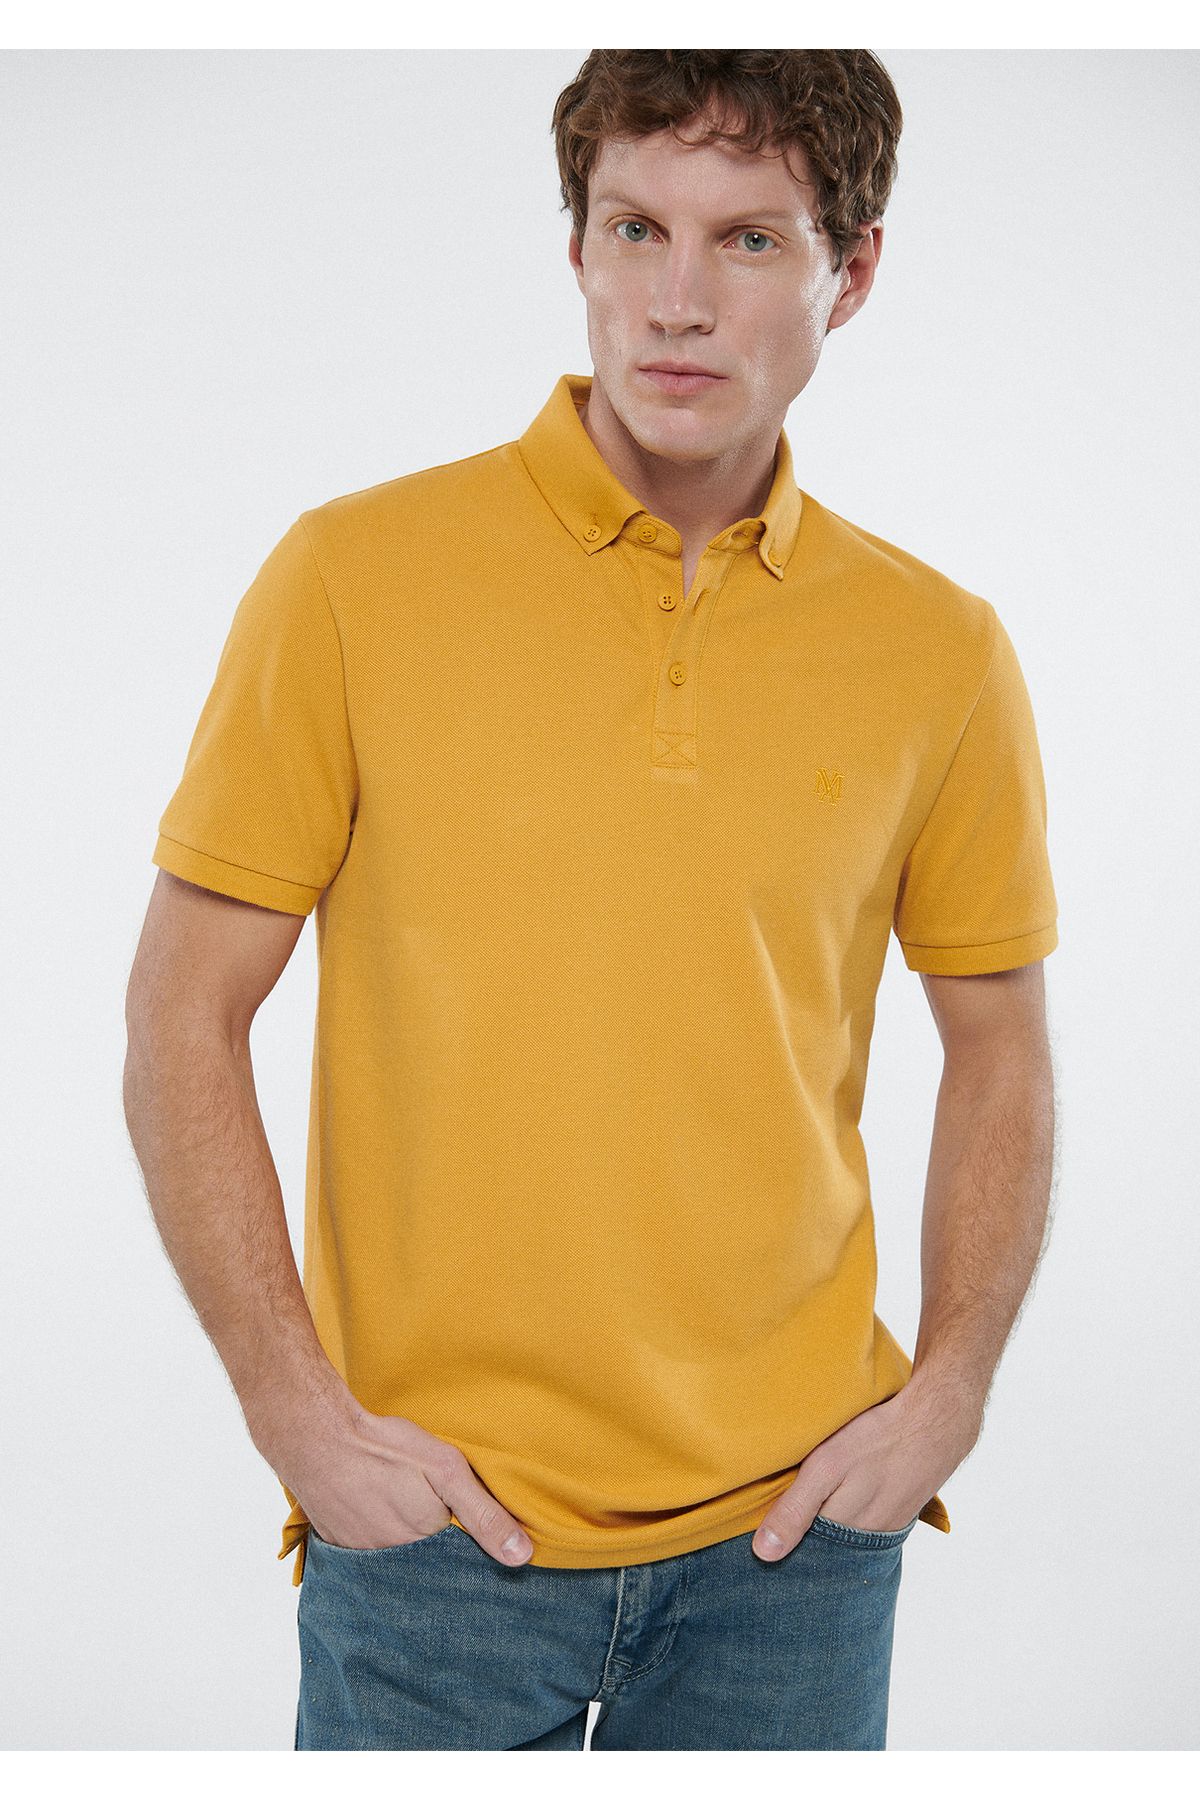 Mavi Sarı Polo Tişört Fitted / Vücuda Oturan Kesim 063247-30719